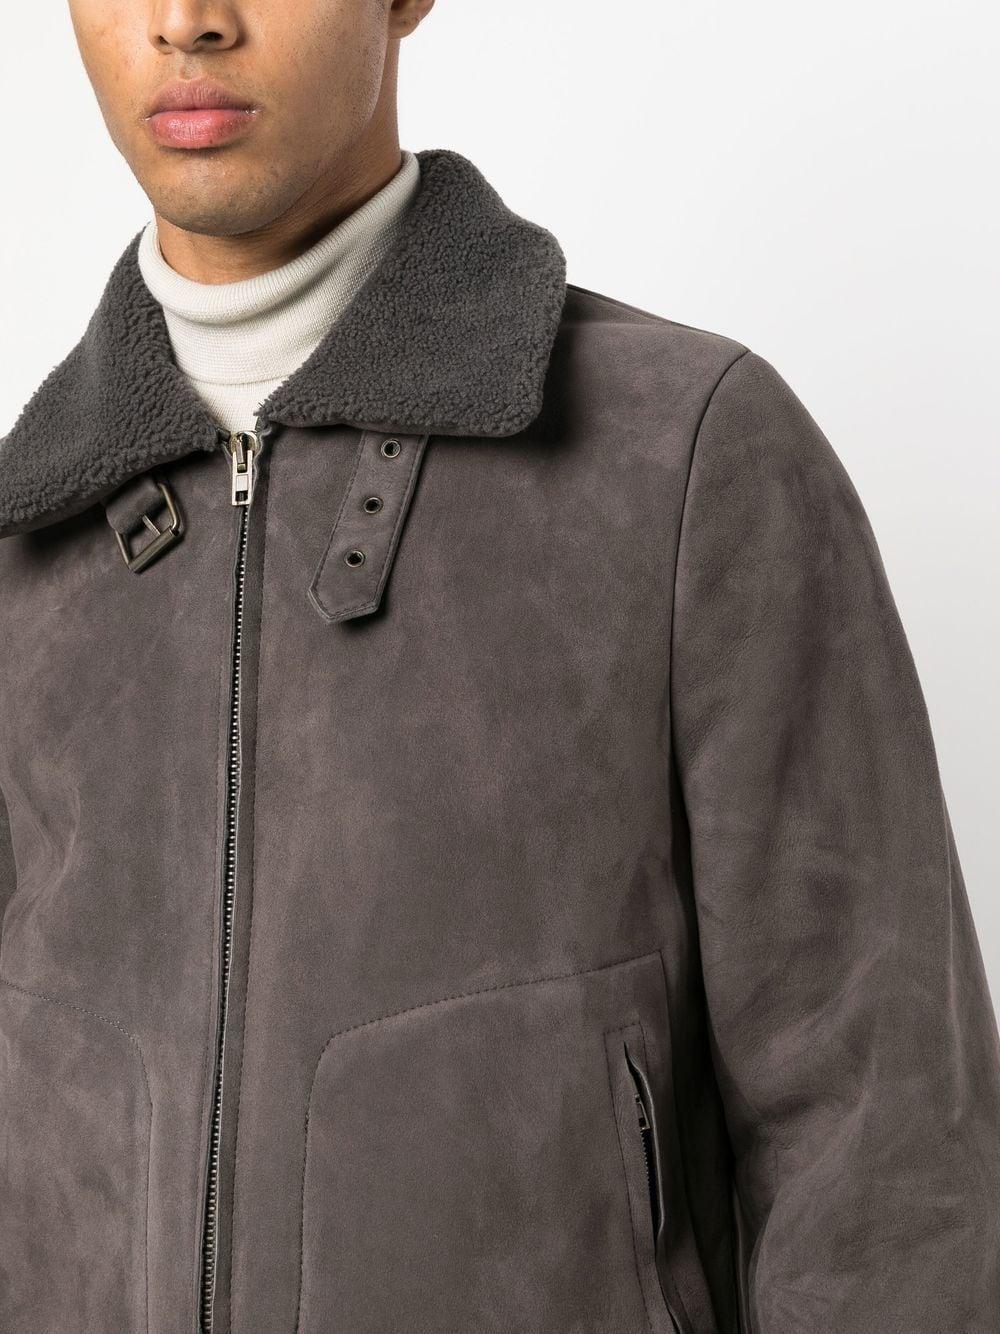 Salvatore Santoro Shearling-collar Zipped Jacket in Gray for Men | Lyst